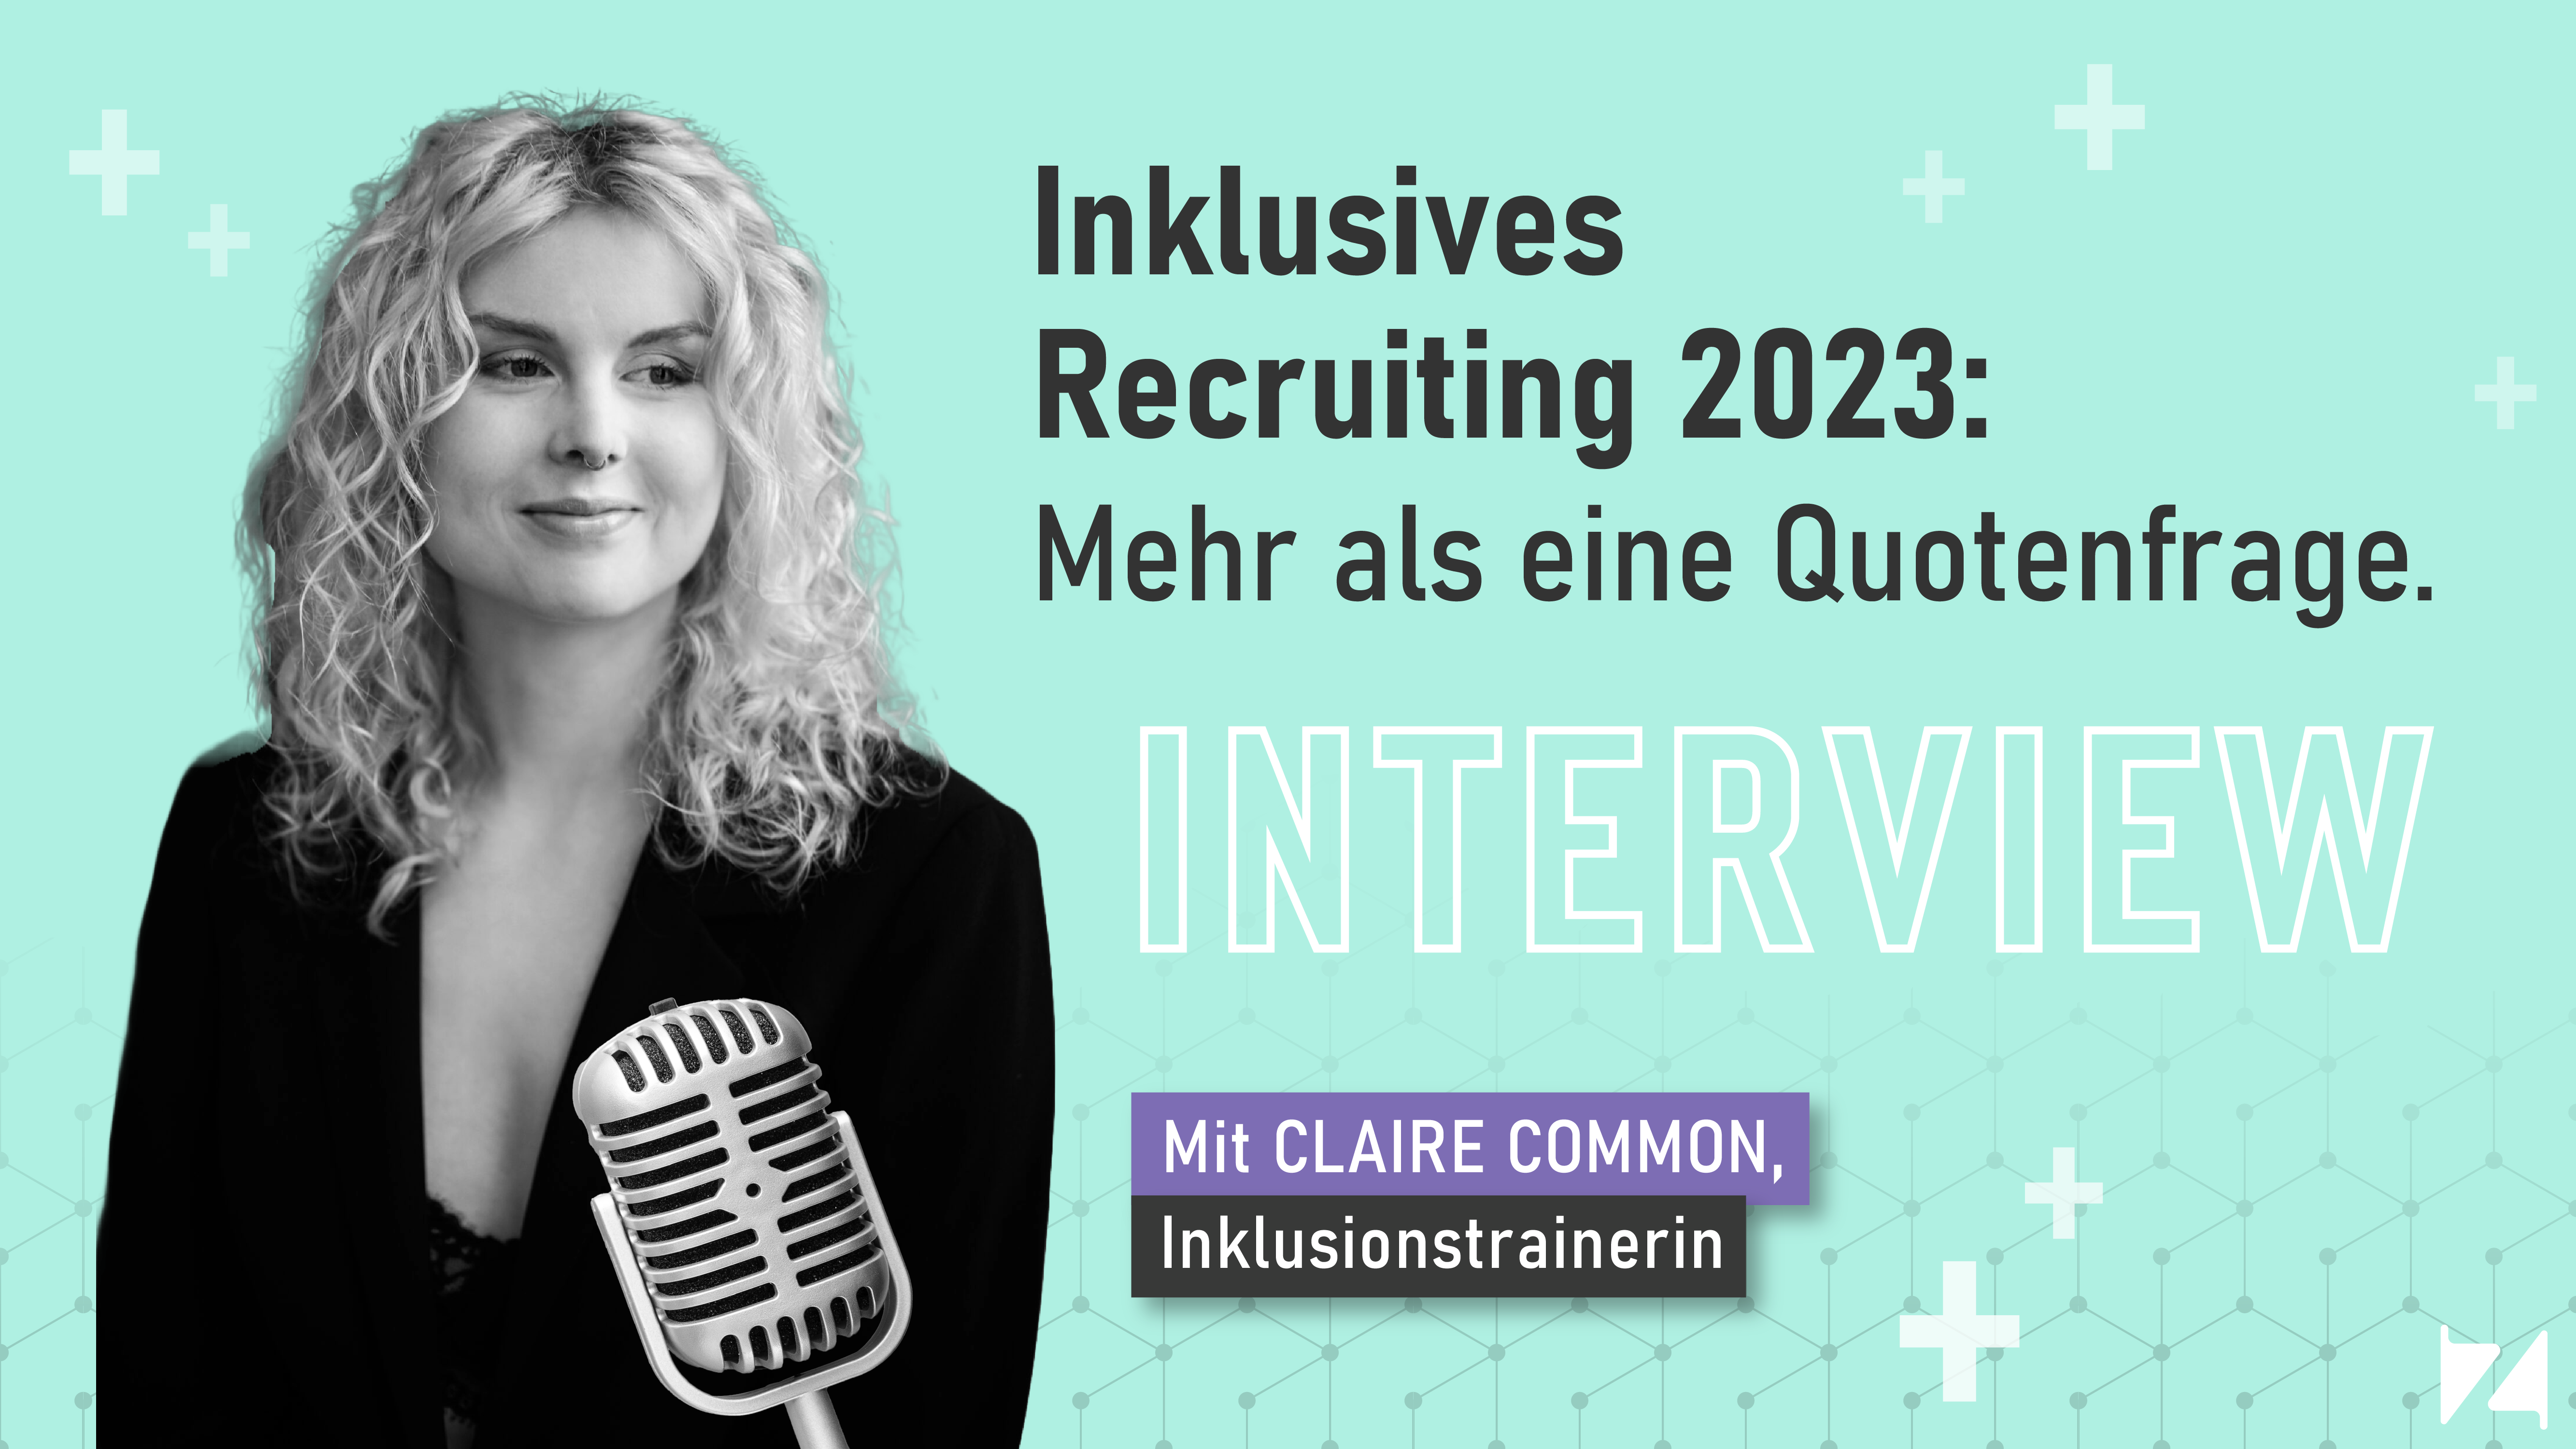 Interview Claire Common und ZNAPP über inklusives recruiting